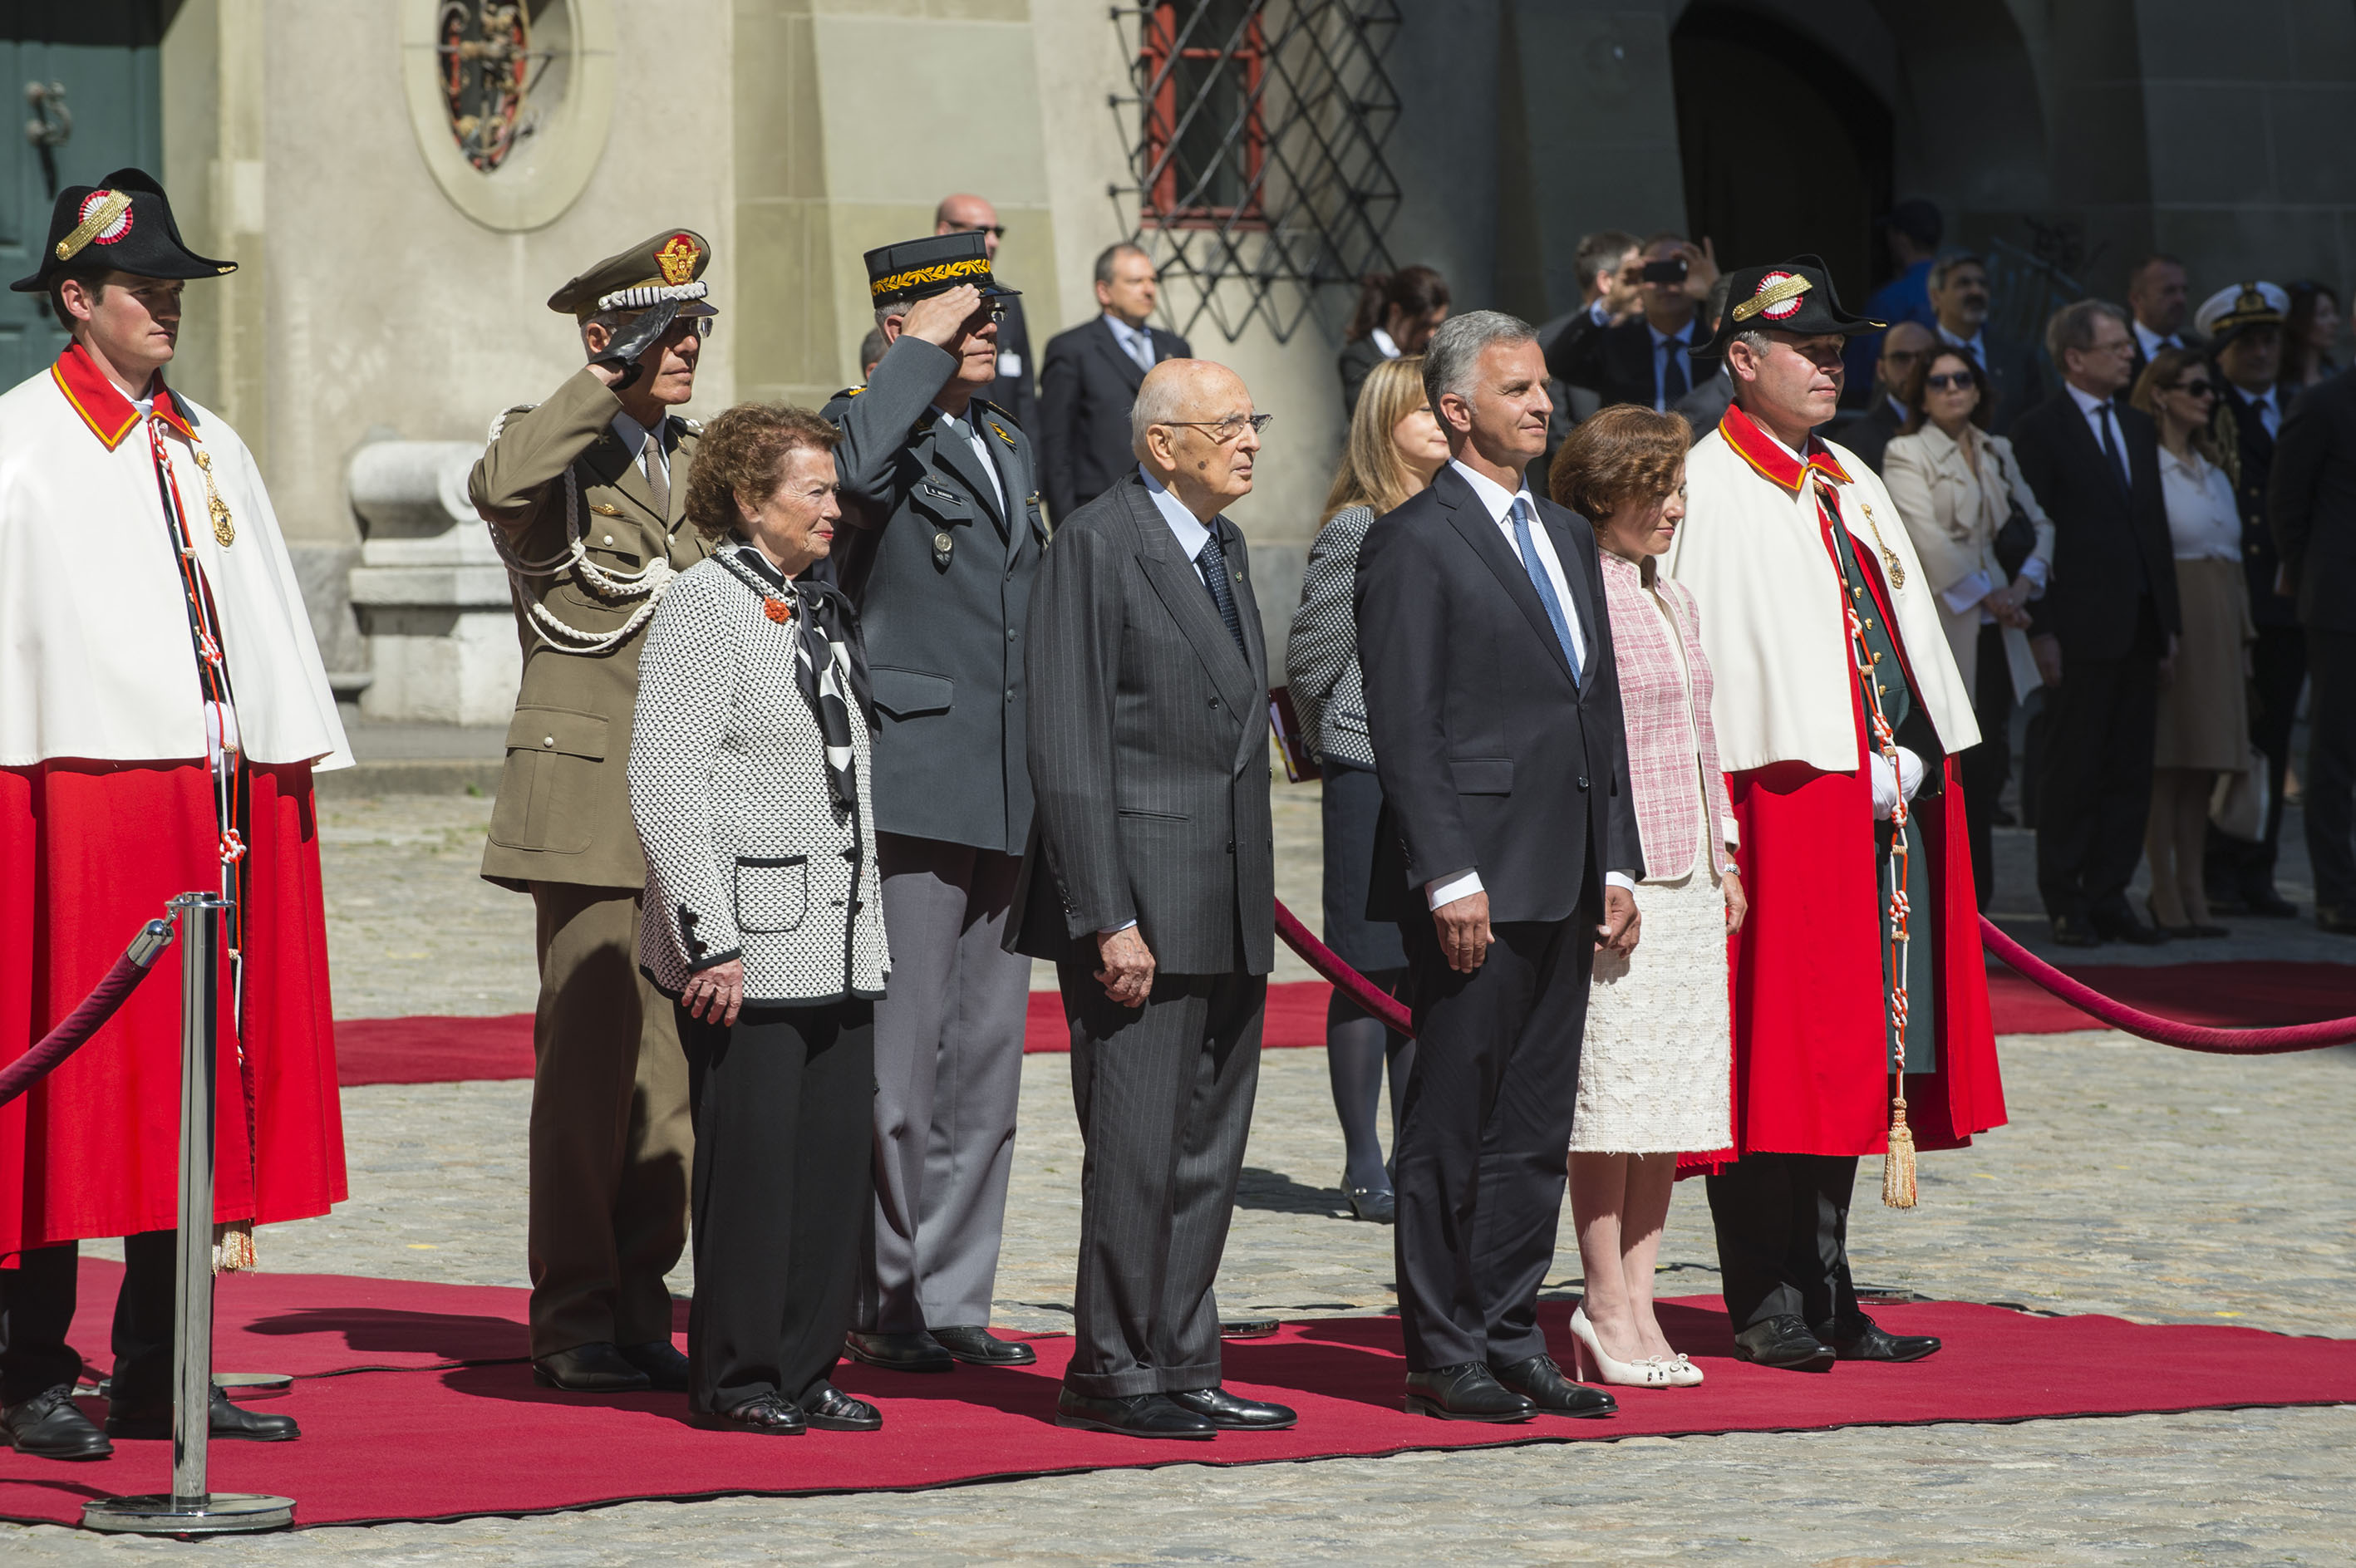 The president of the Italian Republic Giorgio Napolitano received with military honours.